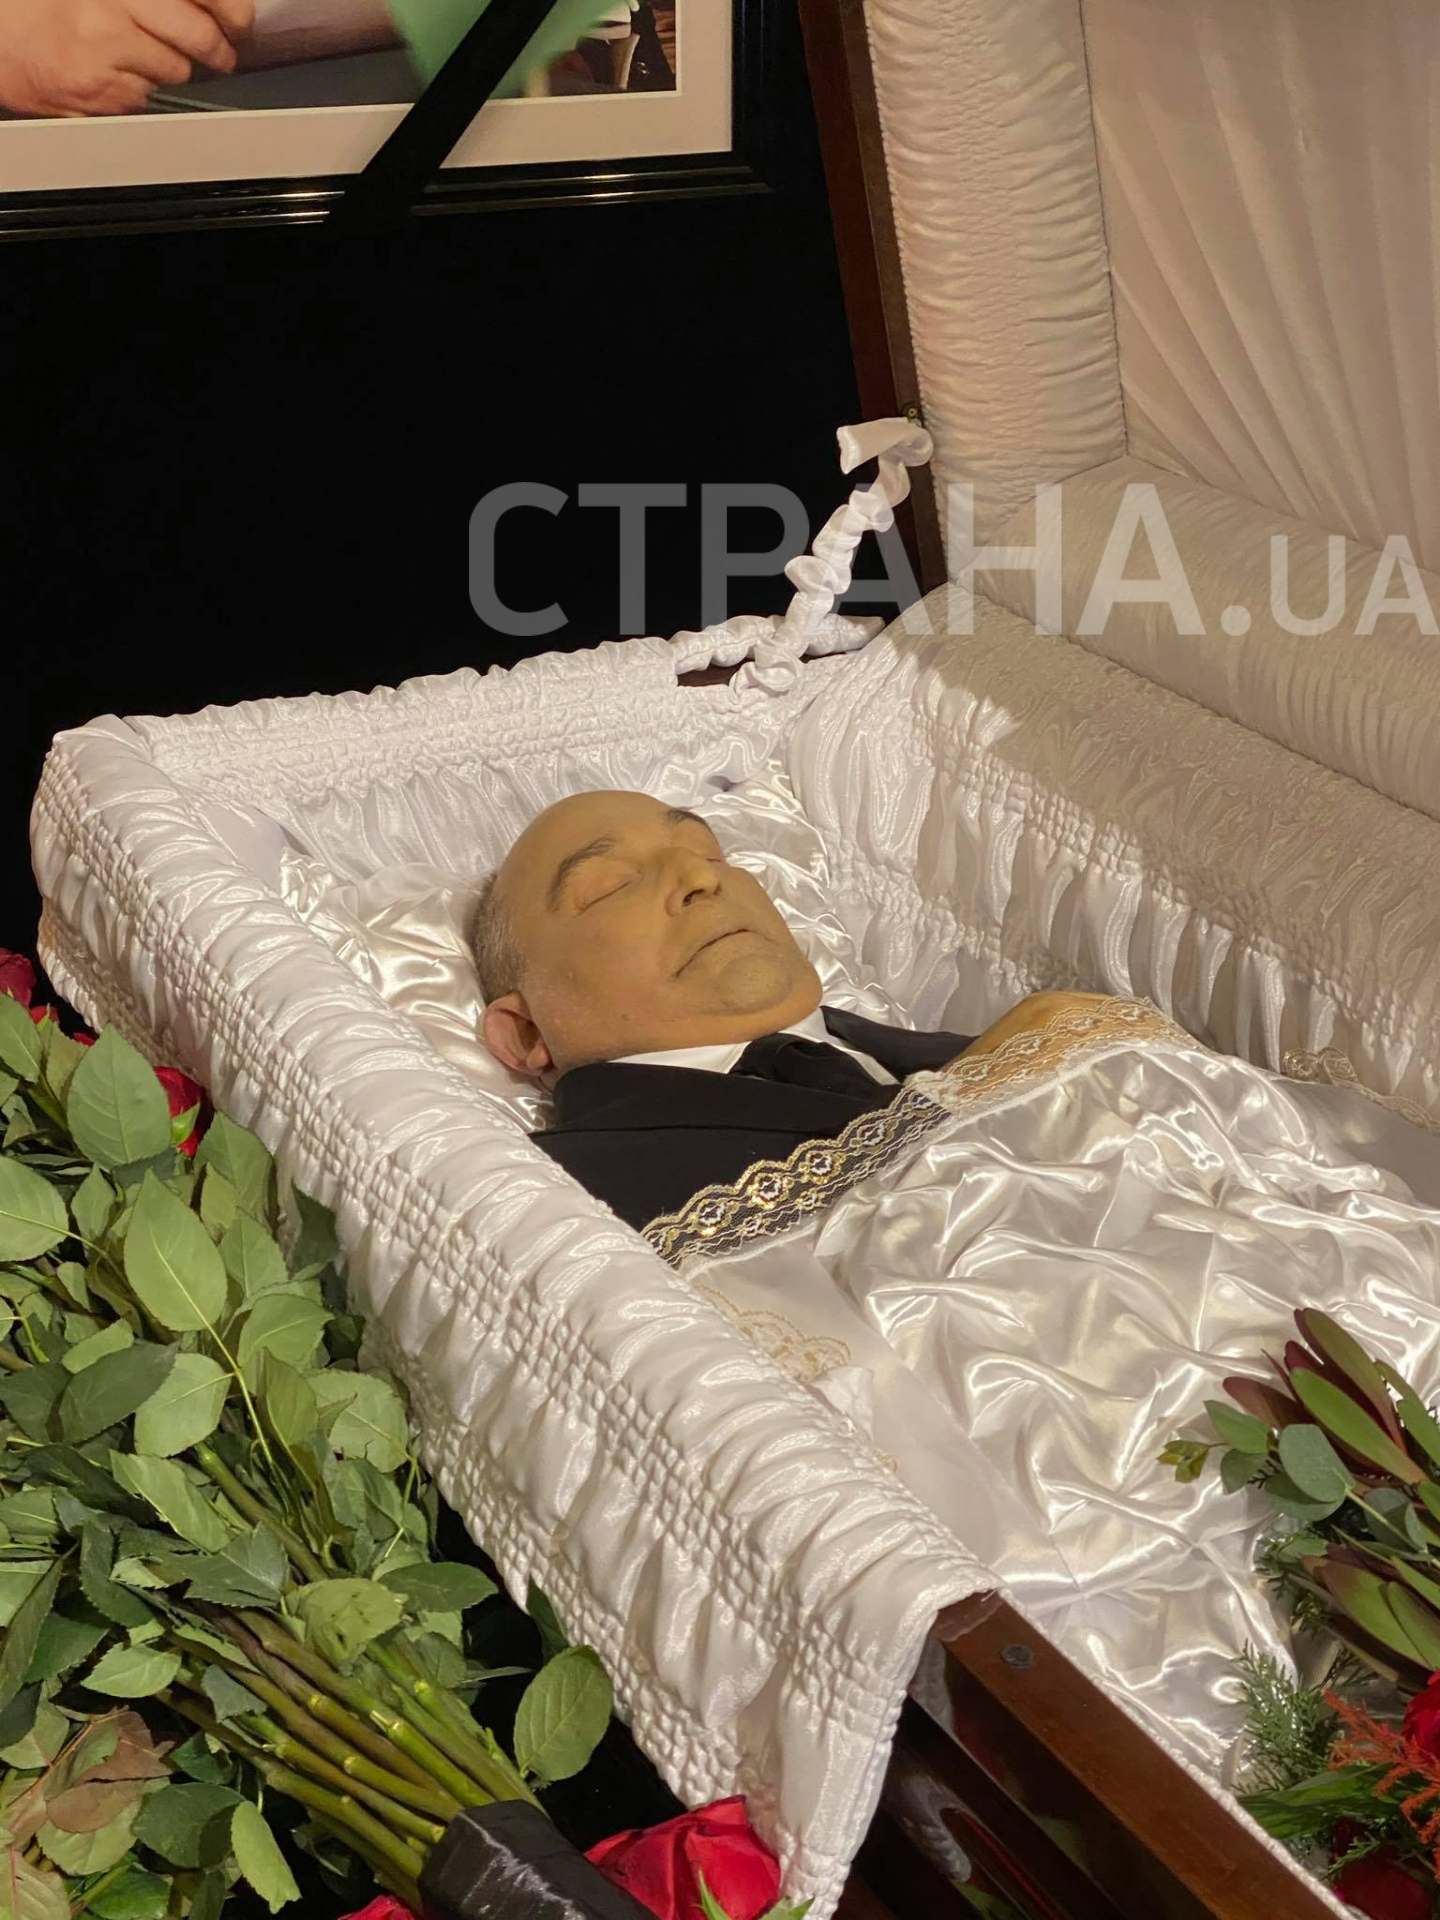 Геннадий Кернес умер